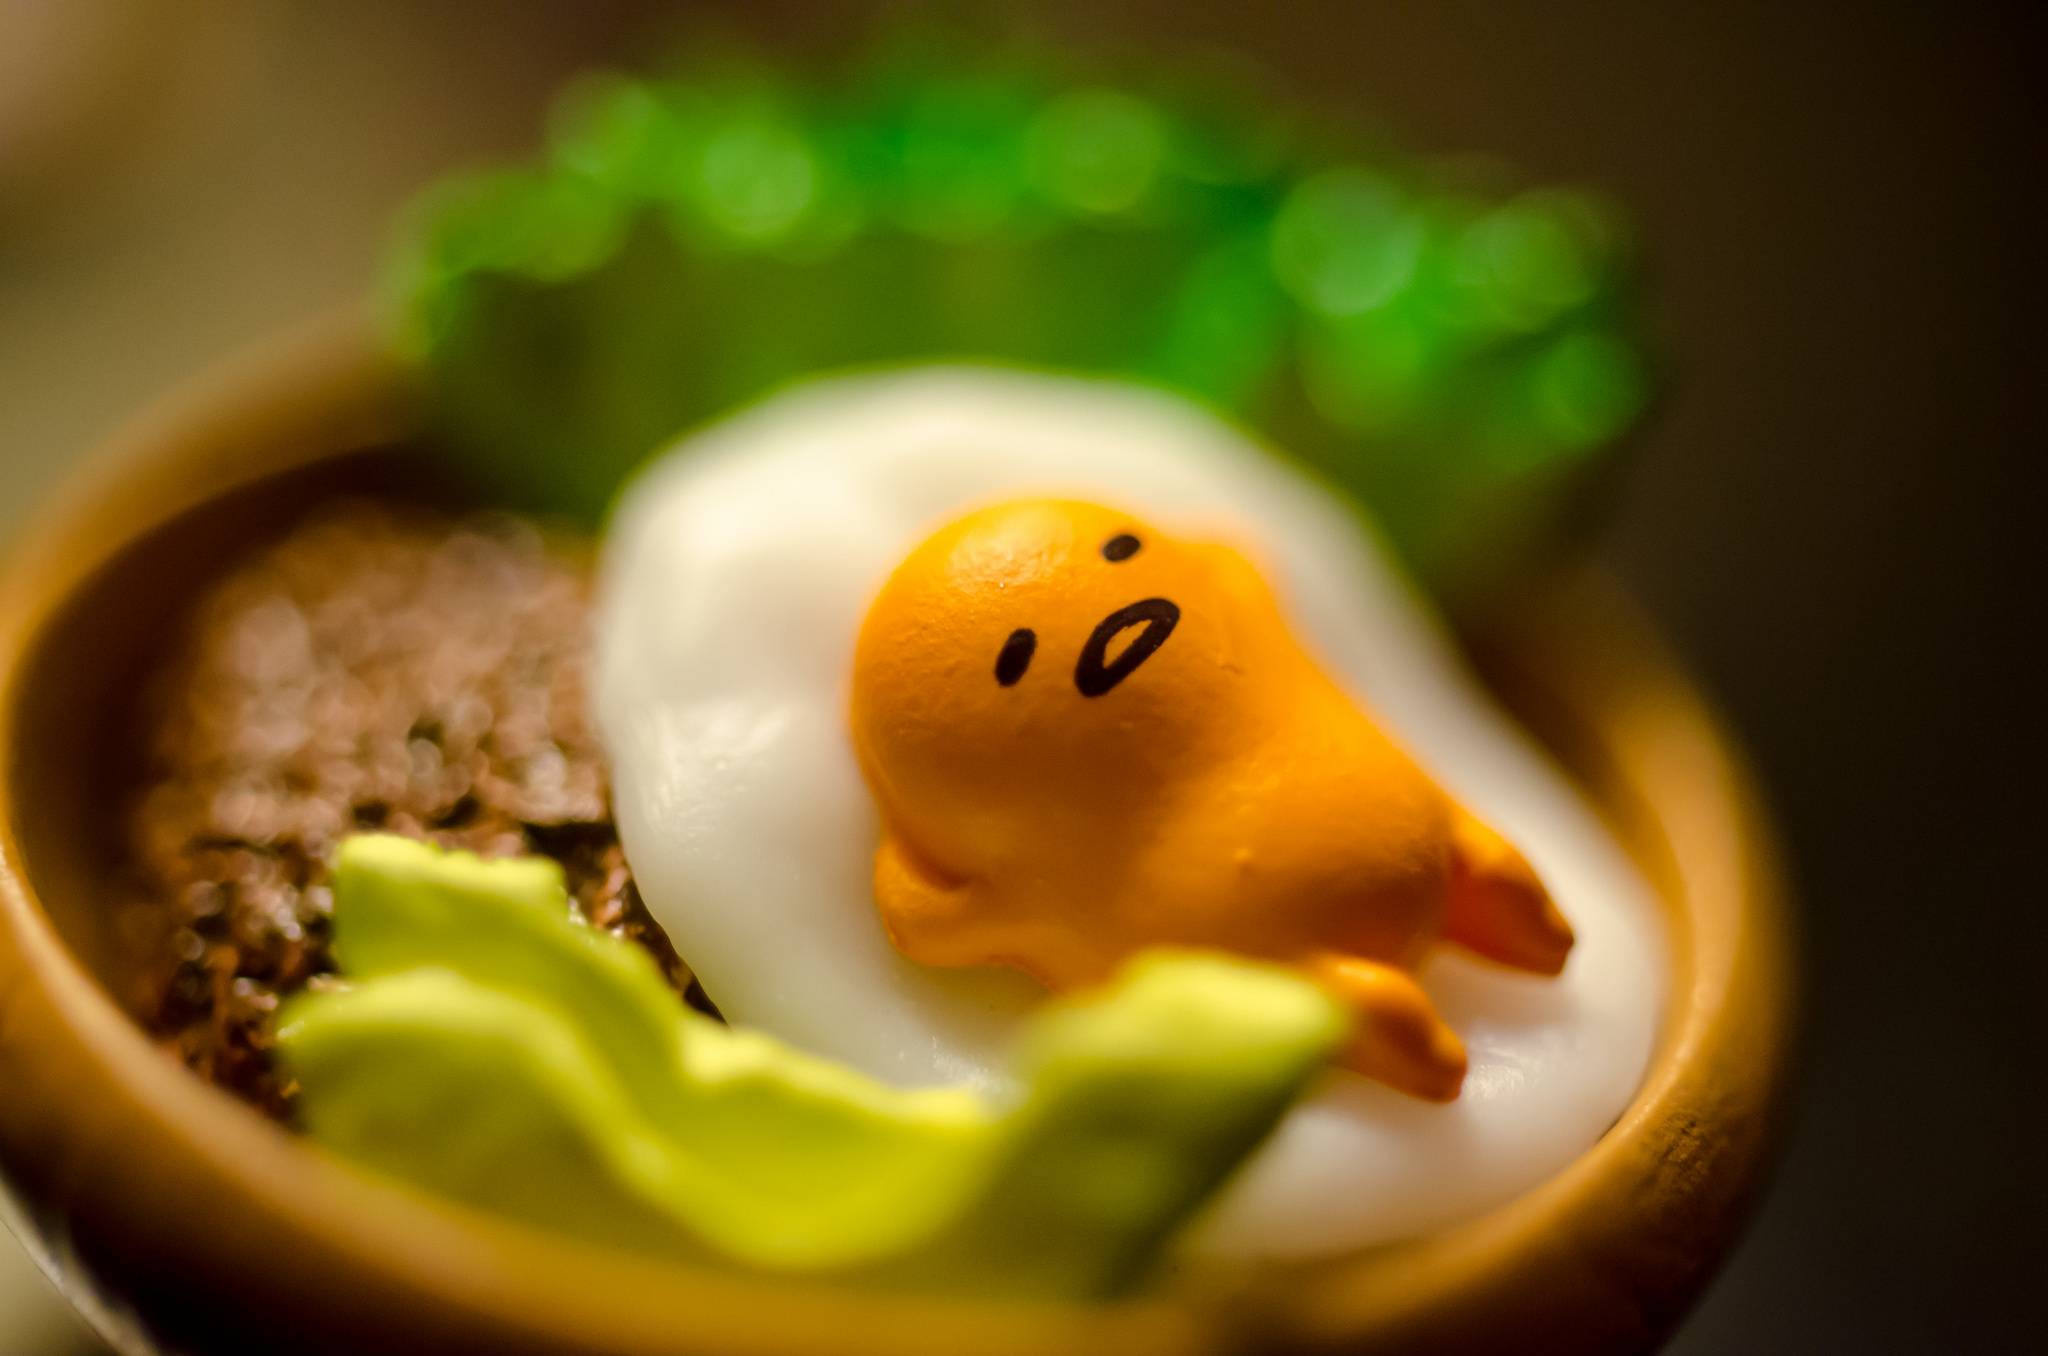 Gudetama: the lazy egg that’s winning hearts in Japan